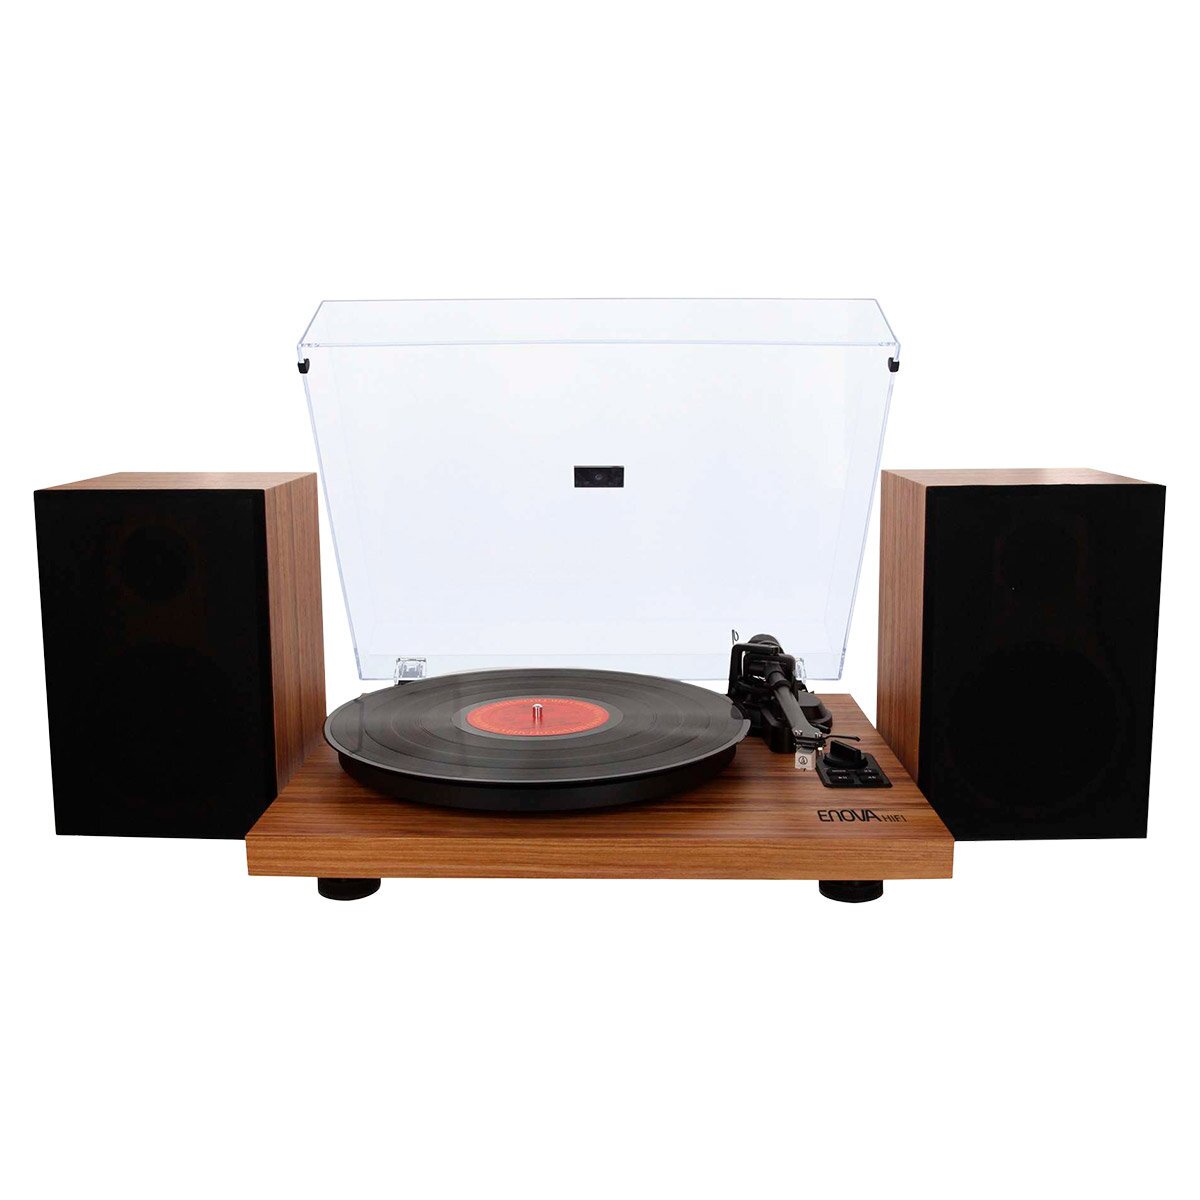 ENOVAHIFI VISION2 SET HiFi vinyl + Speakers, wood finish (vision2 set) : photo 1